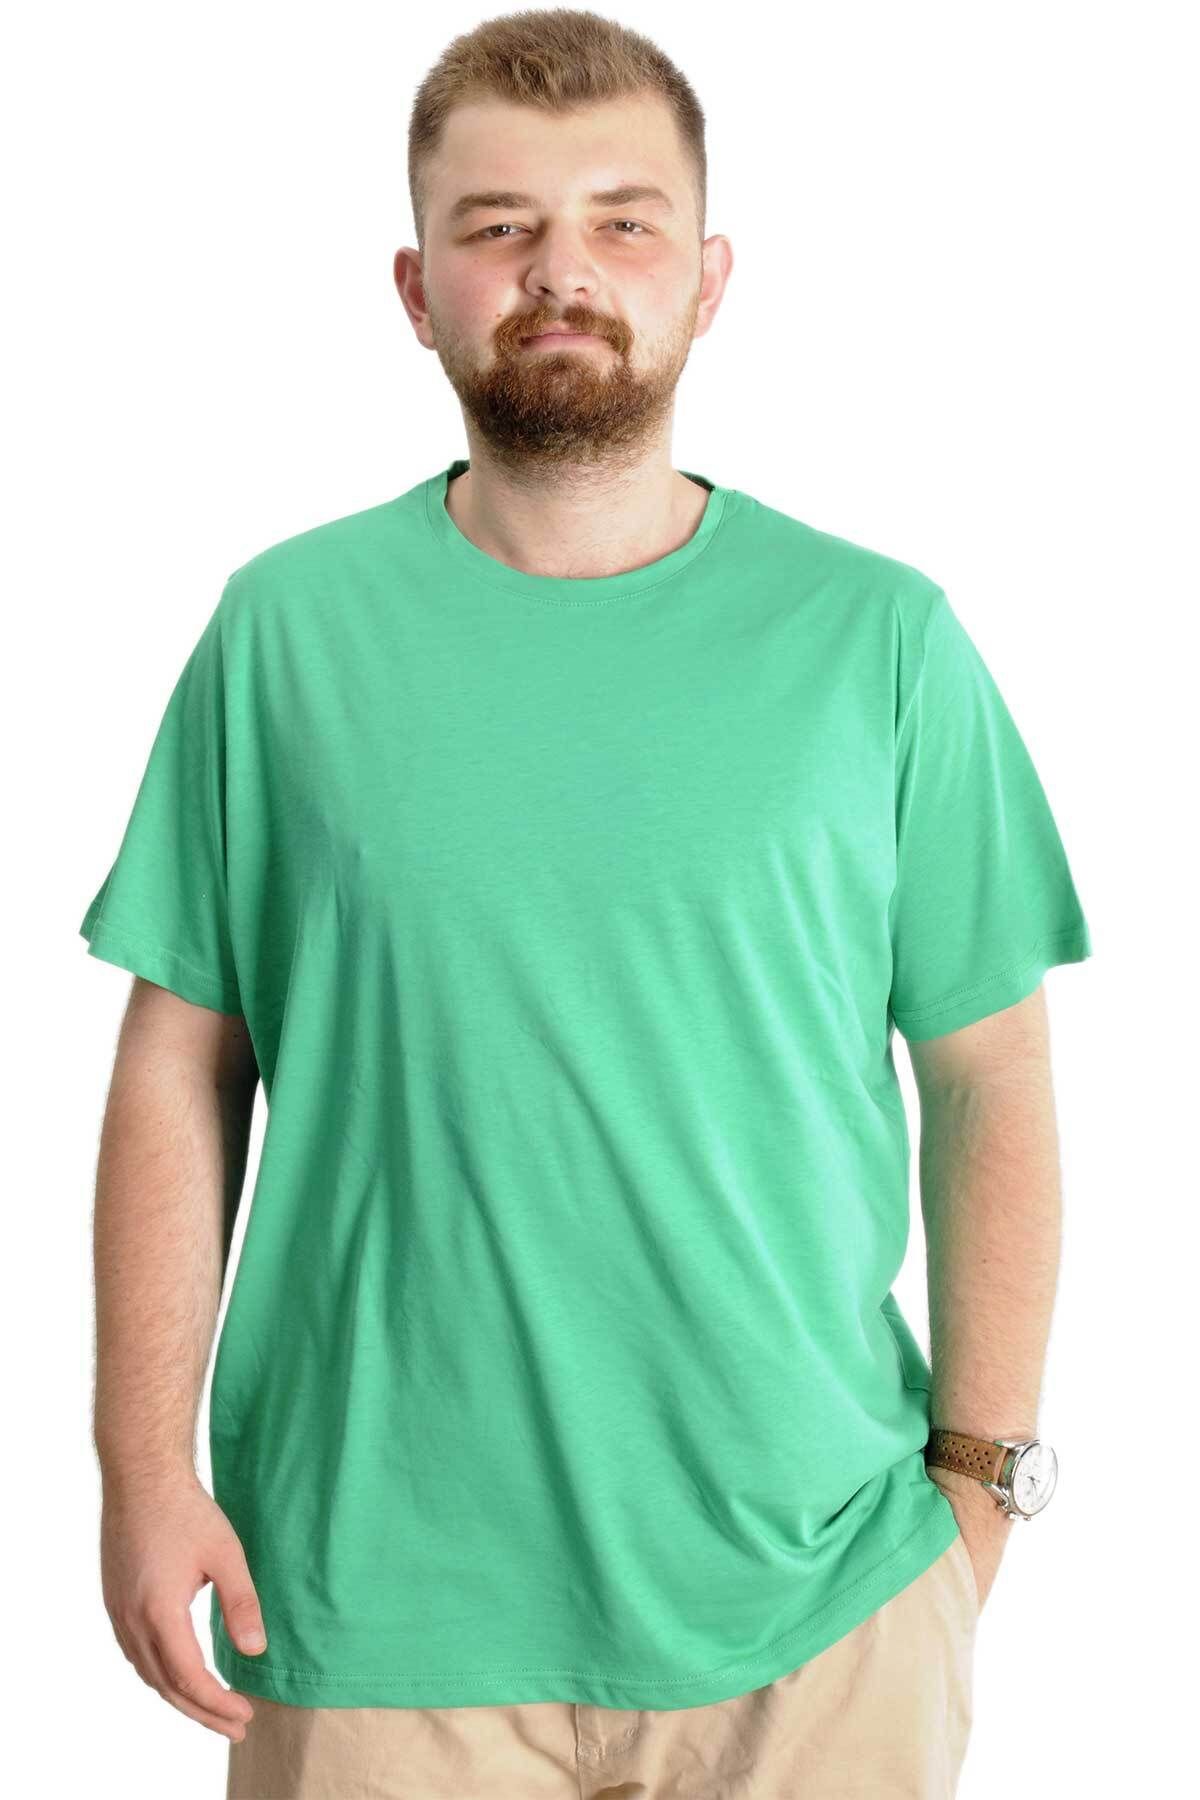 Modexl Mode Xl Büyük Beden Erkek T-shirt Basic 20031 Yesil